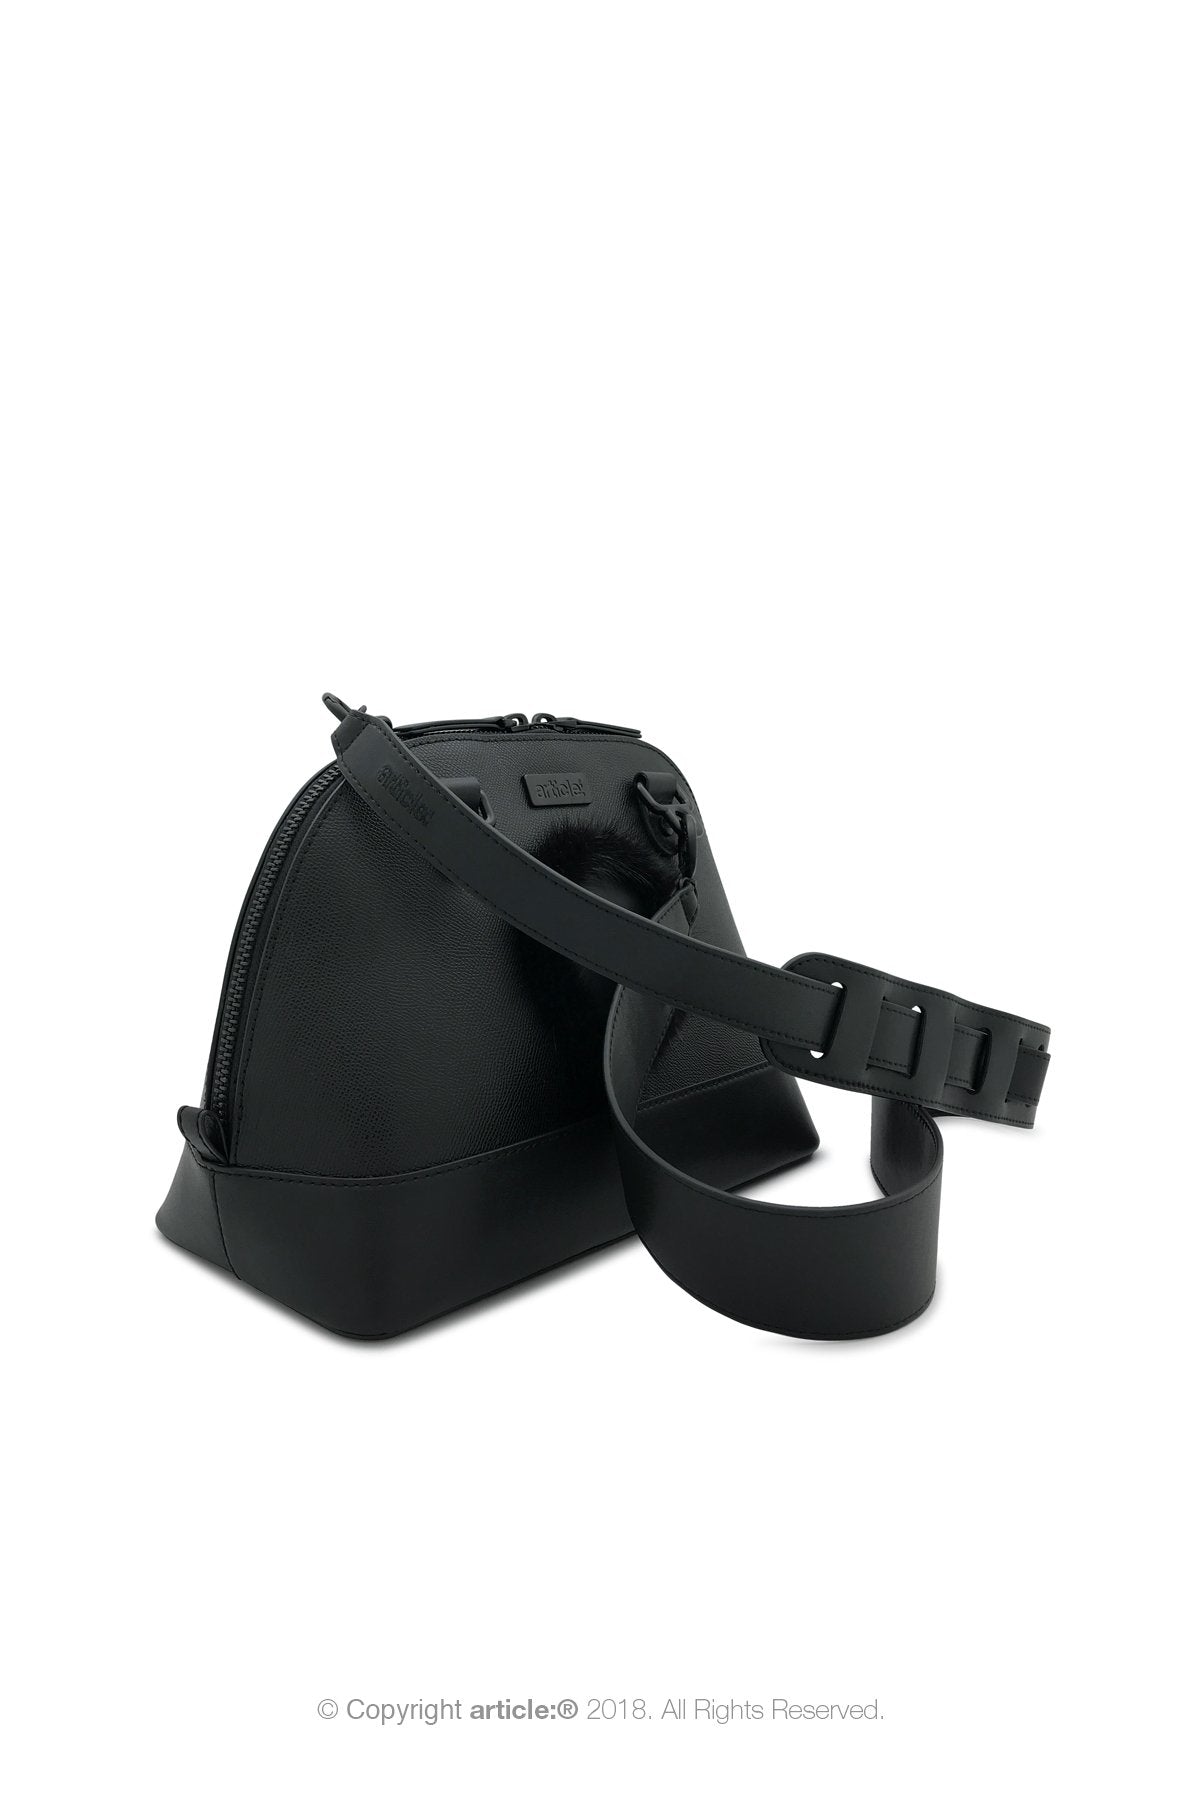 article: #140 Handbag Top Handle - Noir